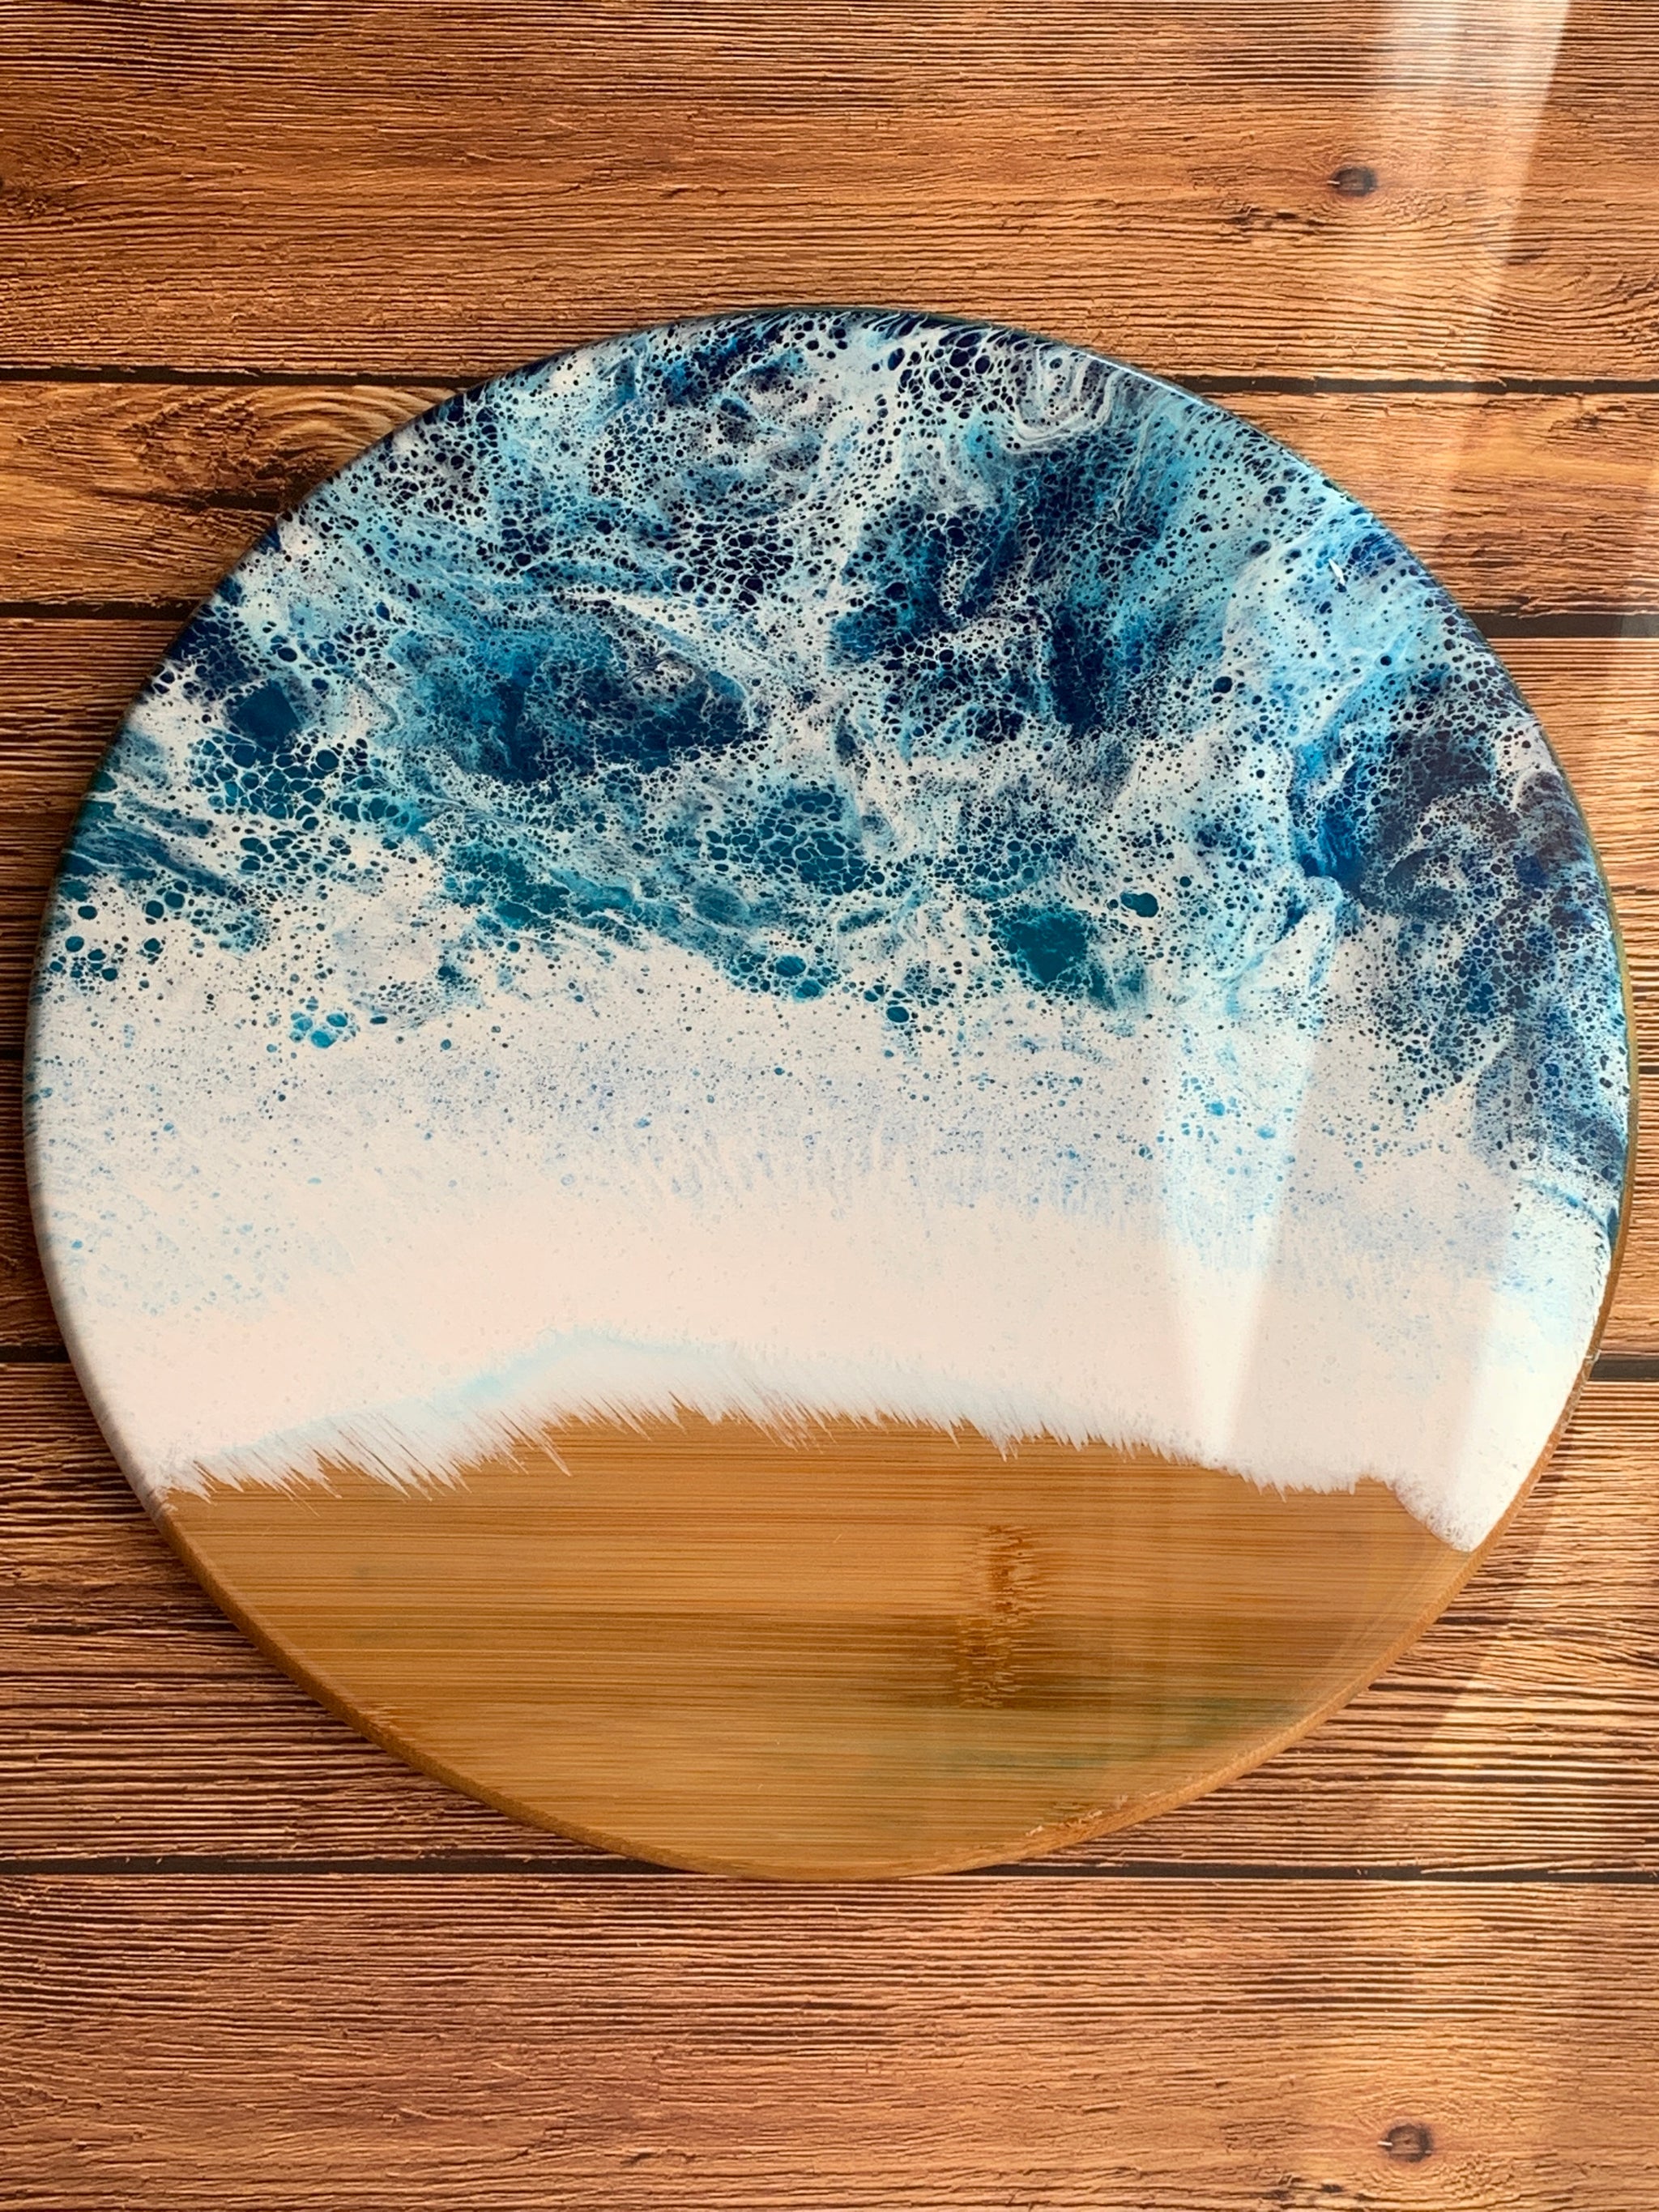 Acacia Wooden Tray: Blue Ocean - SAADIA.ART